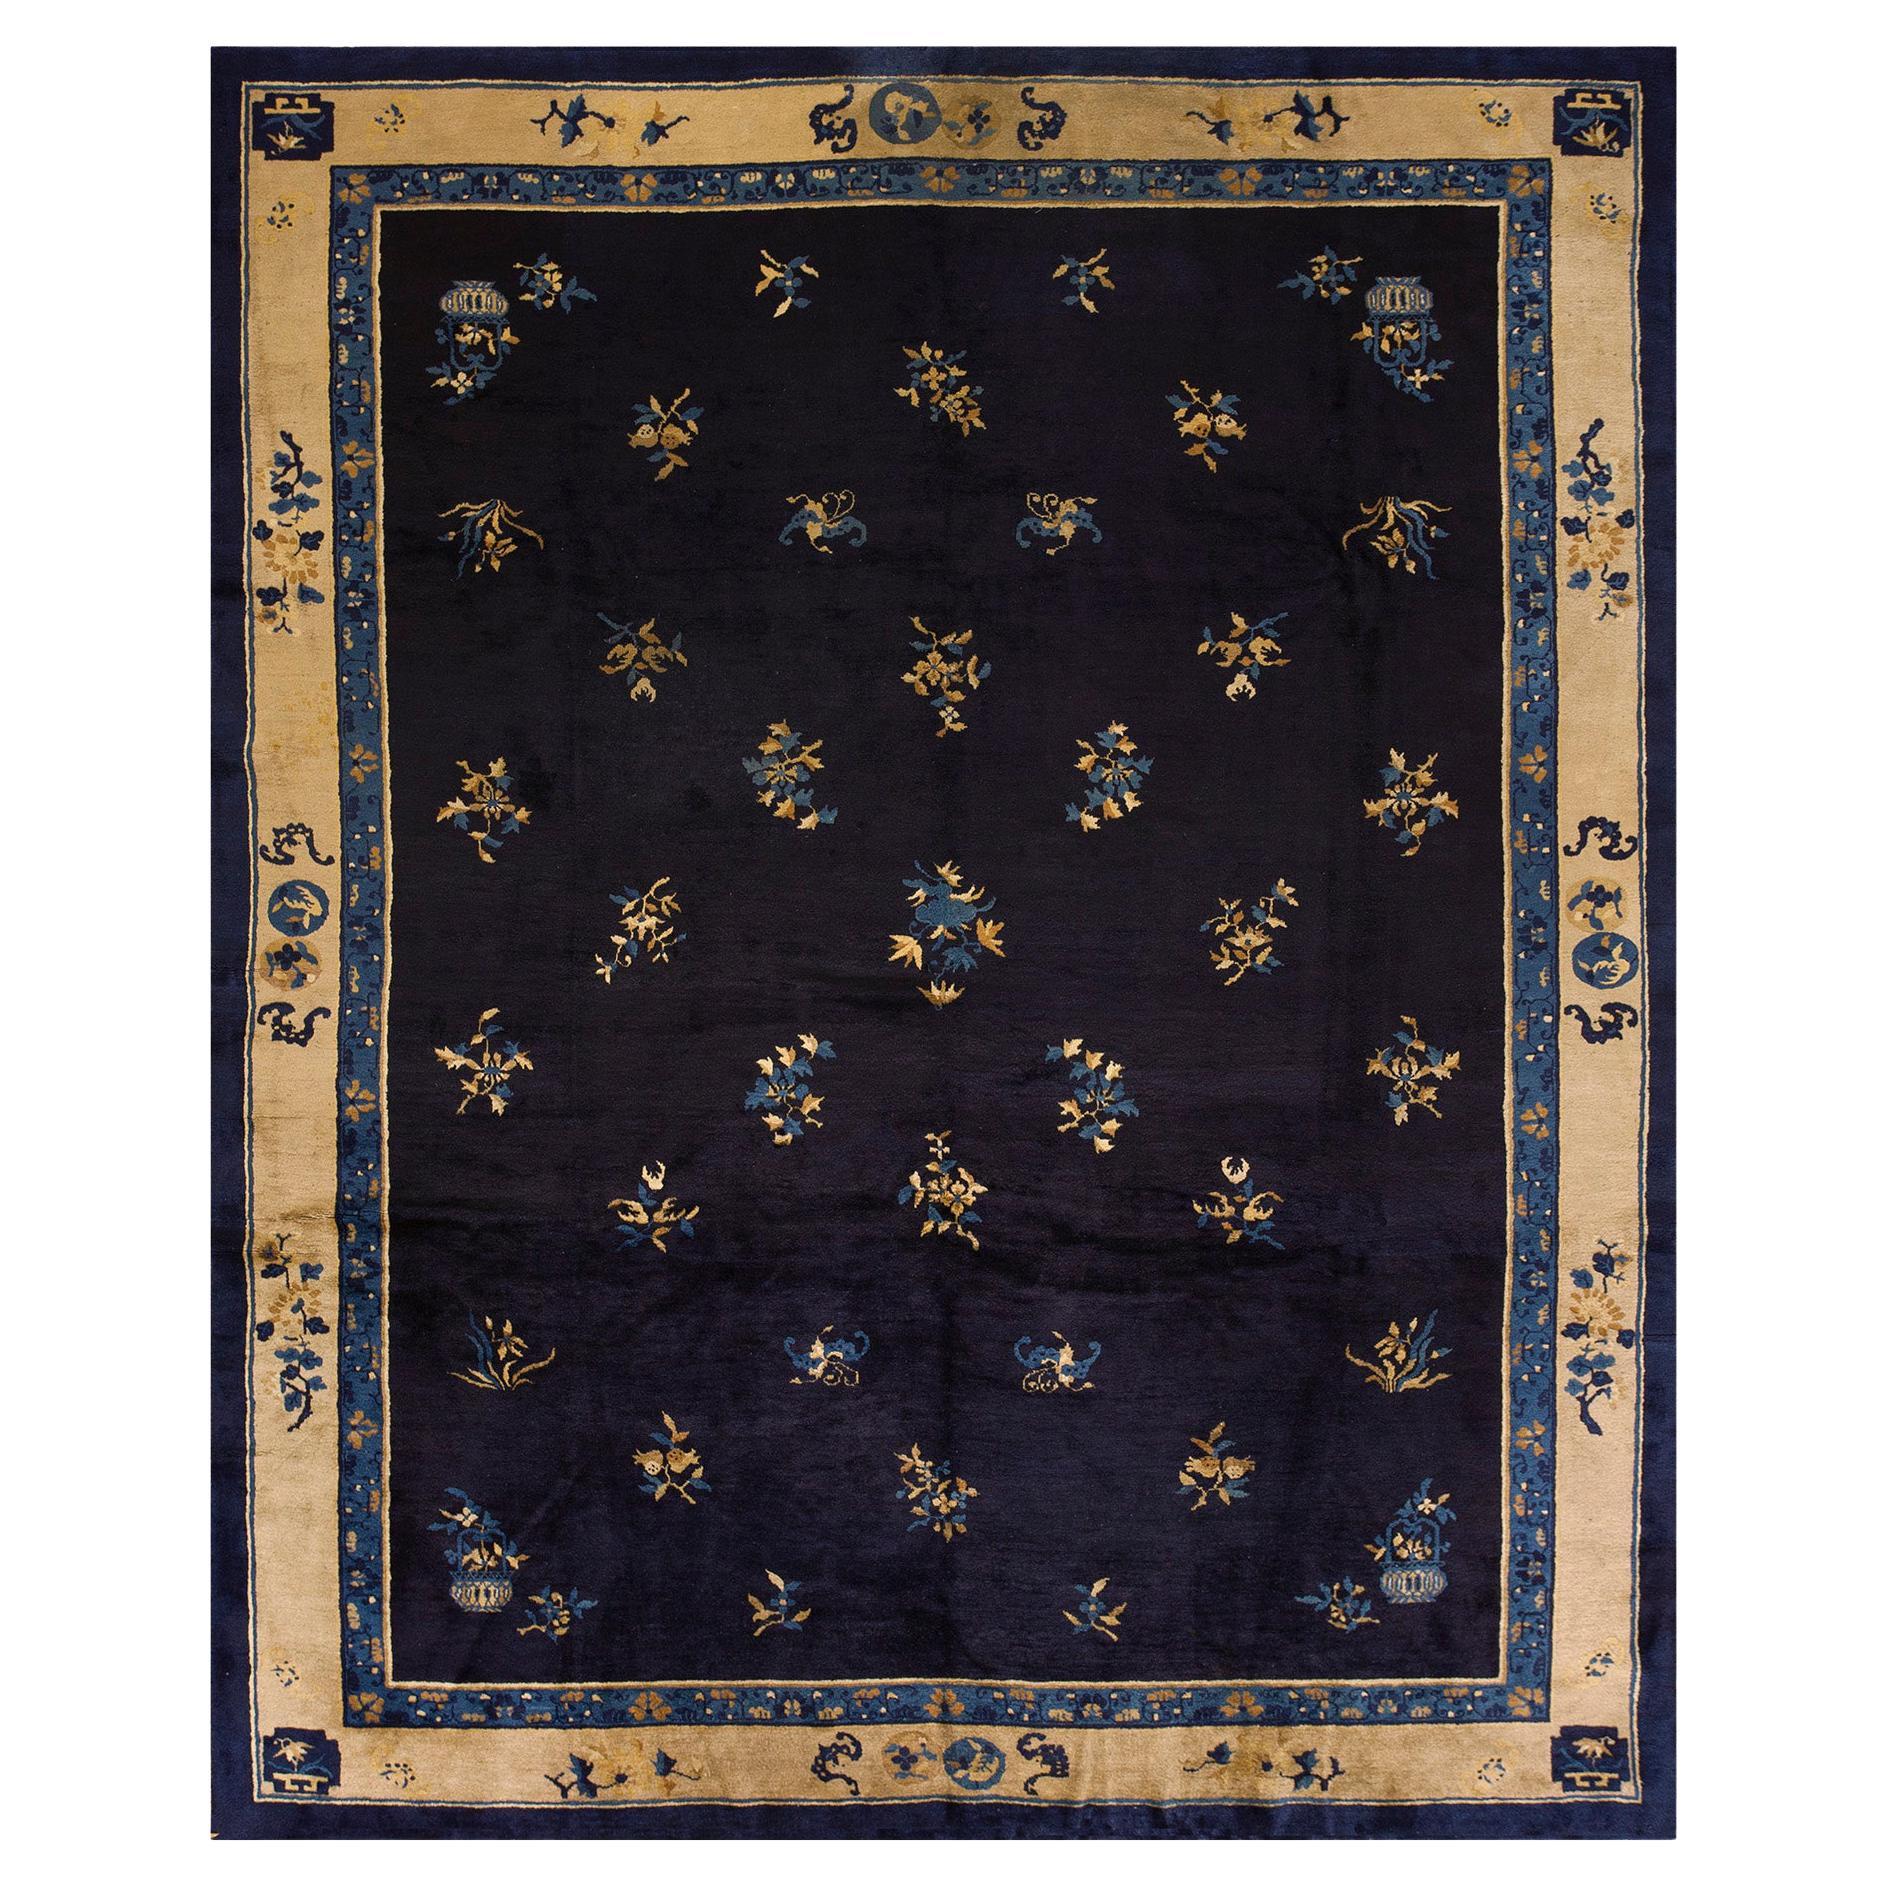 Late 19th Century Chinese Peking Carpet ( 9'6" x 11'7" - 290 x 353 )